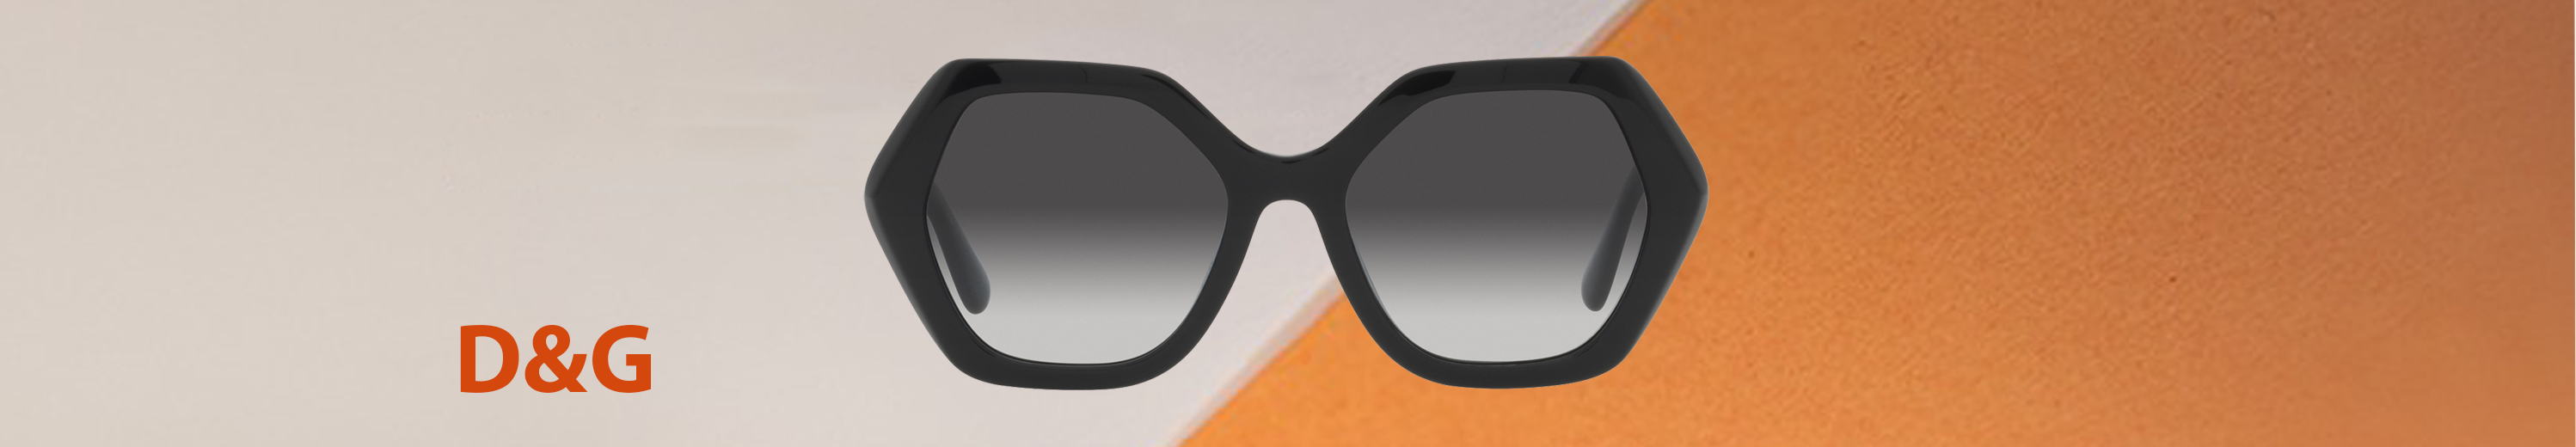 D & G Glasses and Eyewear